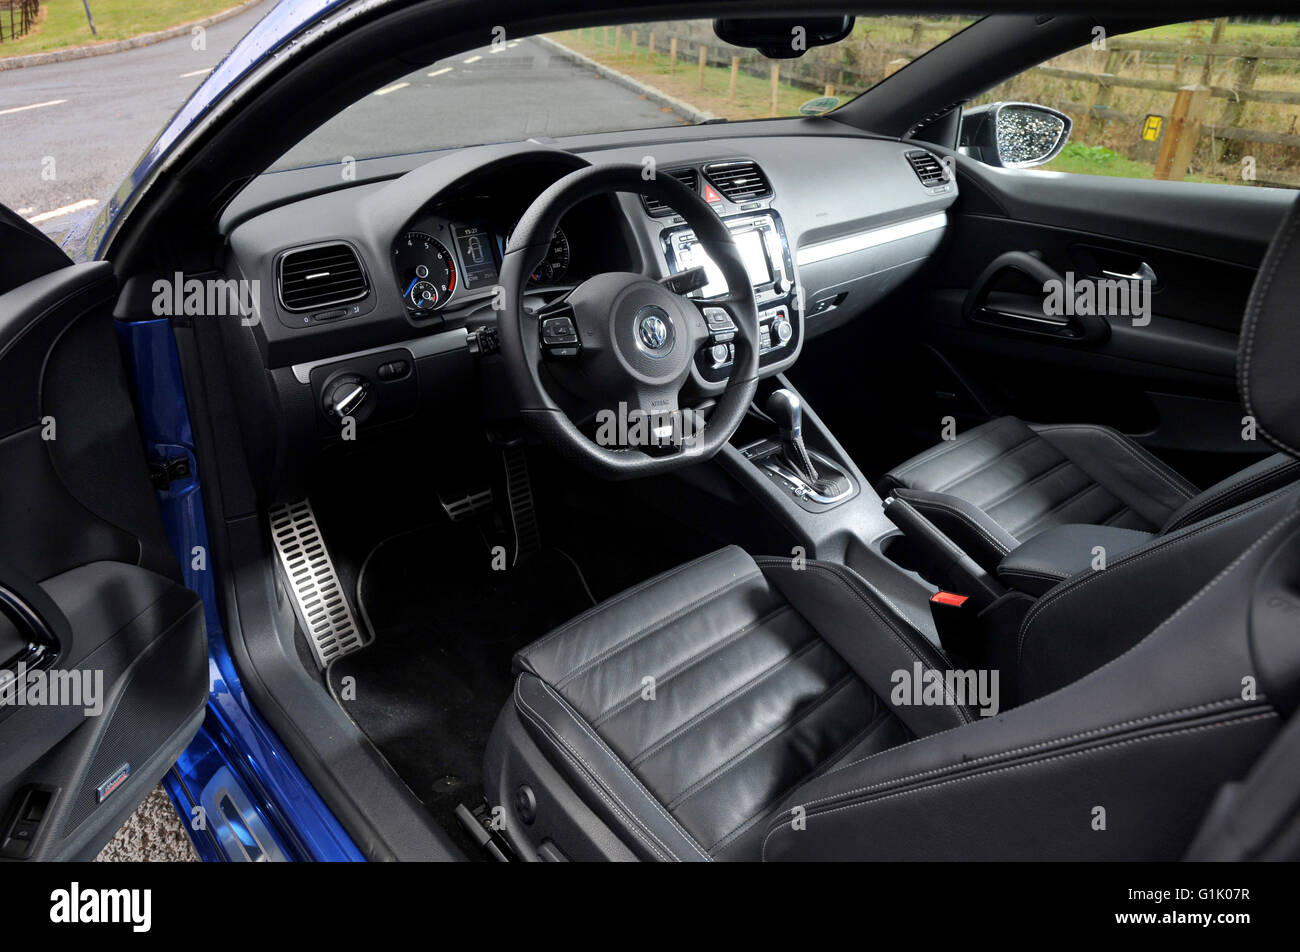 2009 VW Scirocco R performance car interior Stock Photo - Alamy